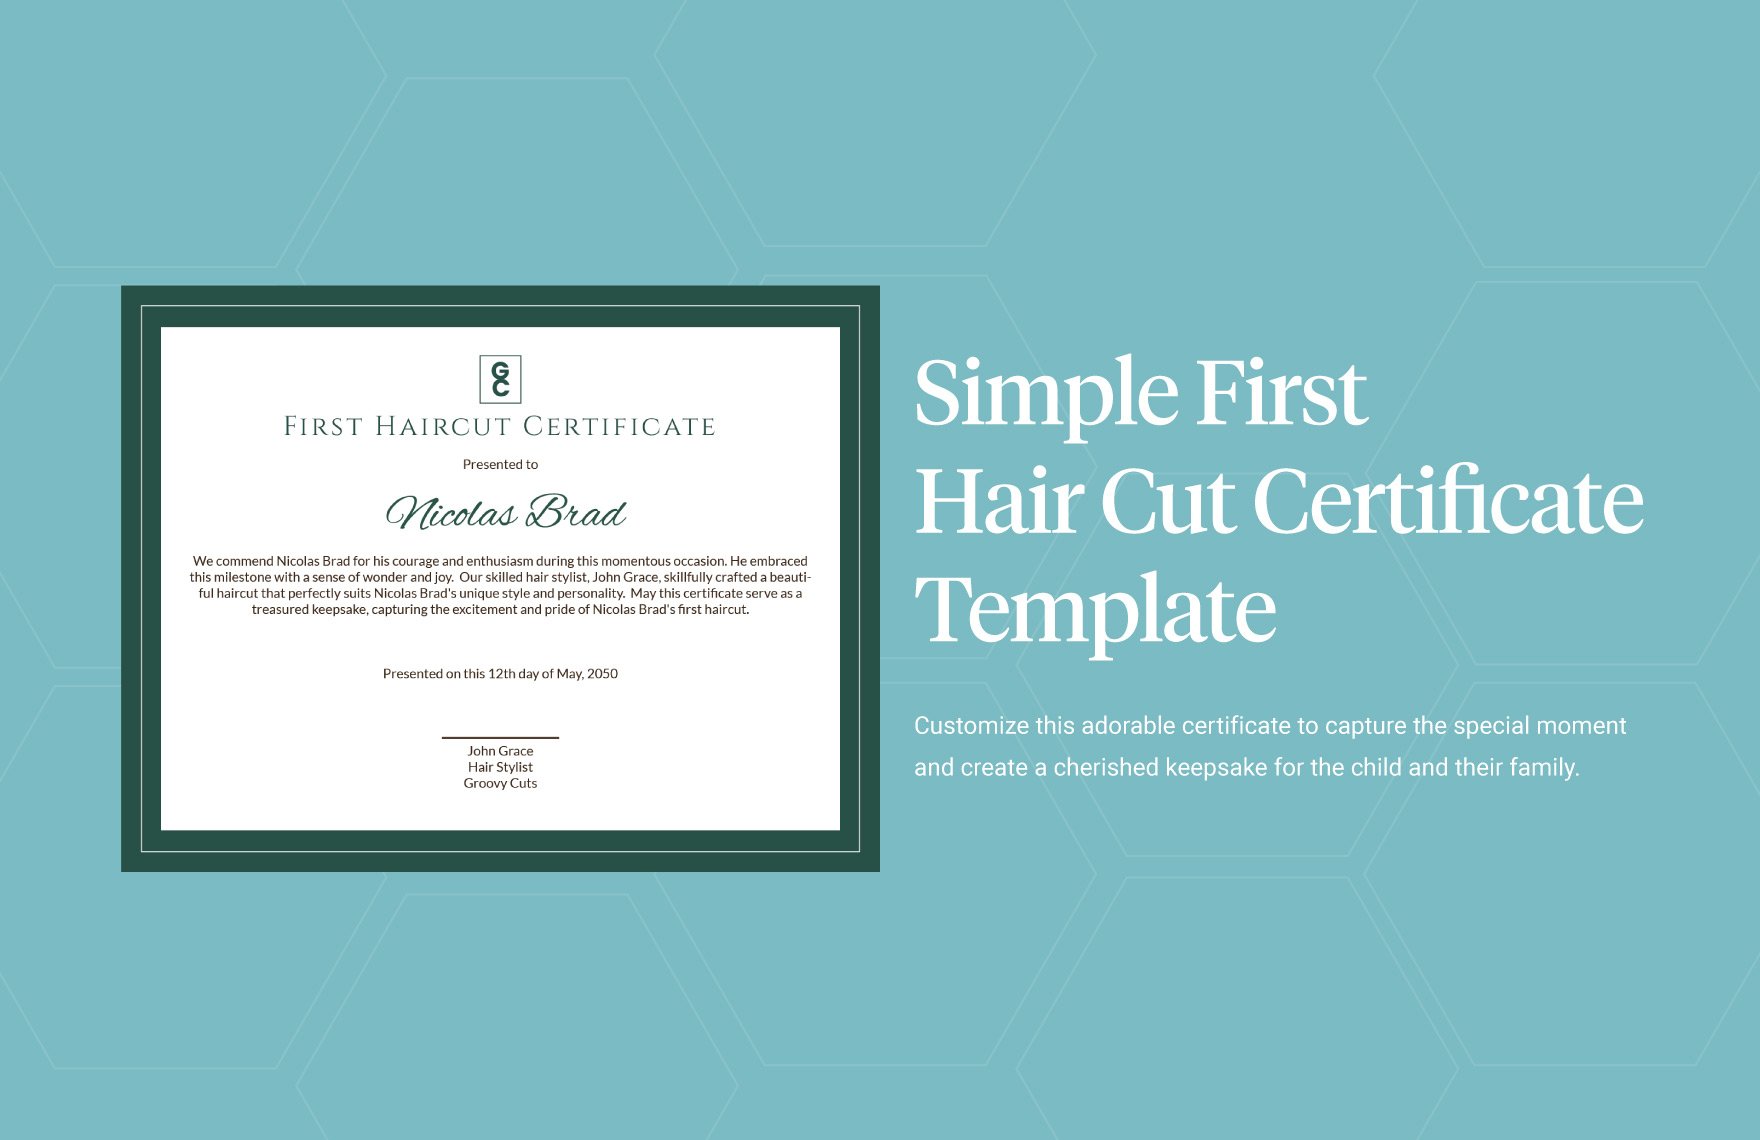 Simple First Hair Cut Certificate Template